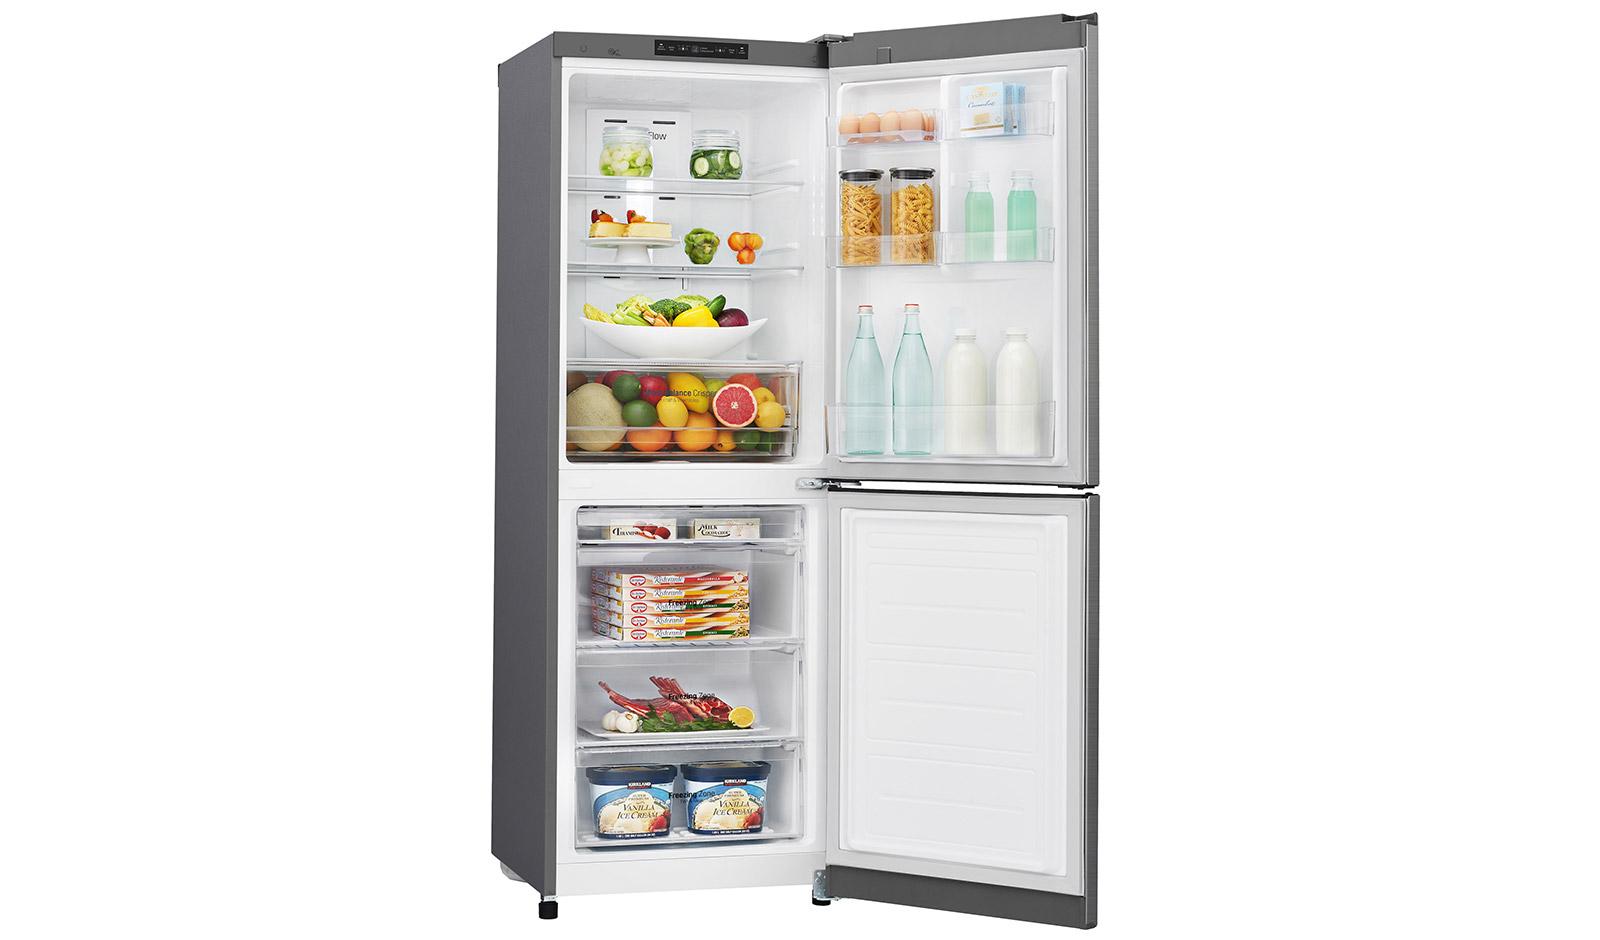 Холодильник LG GA-B389SMCZ. Функциональность